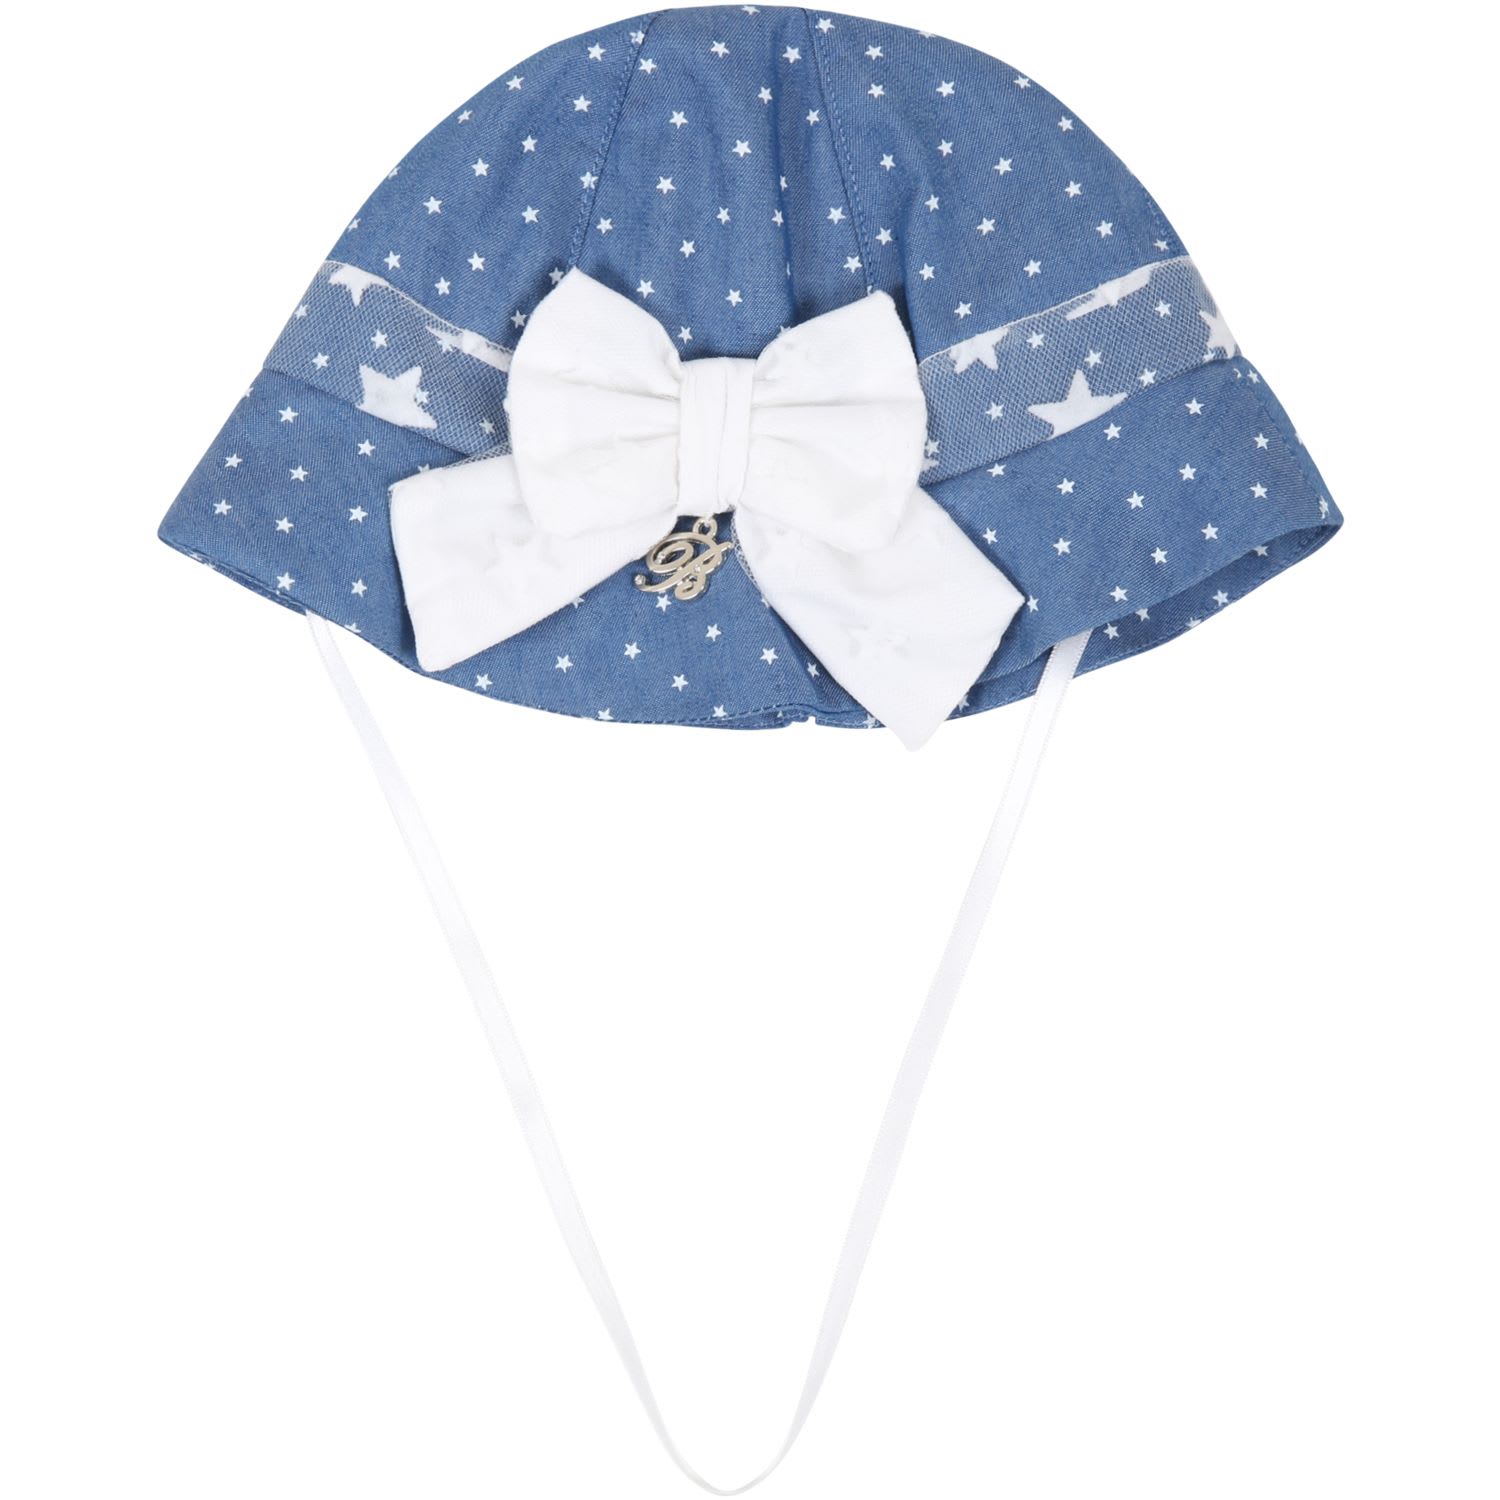 Blumarine Denim Sun Hat For Babygirl With Stars